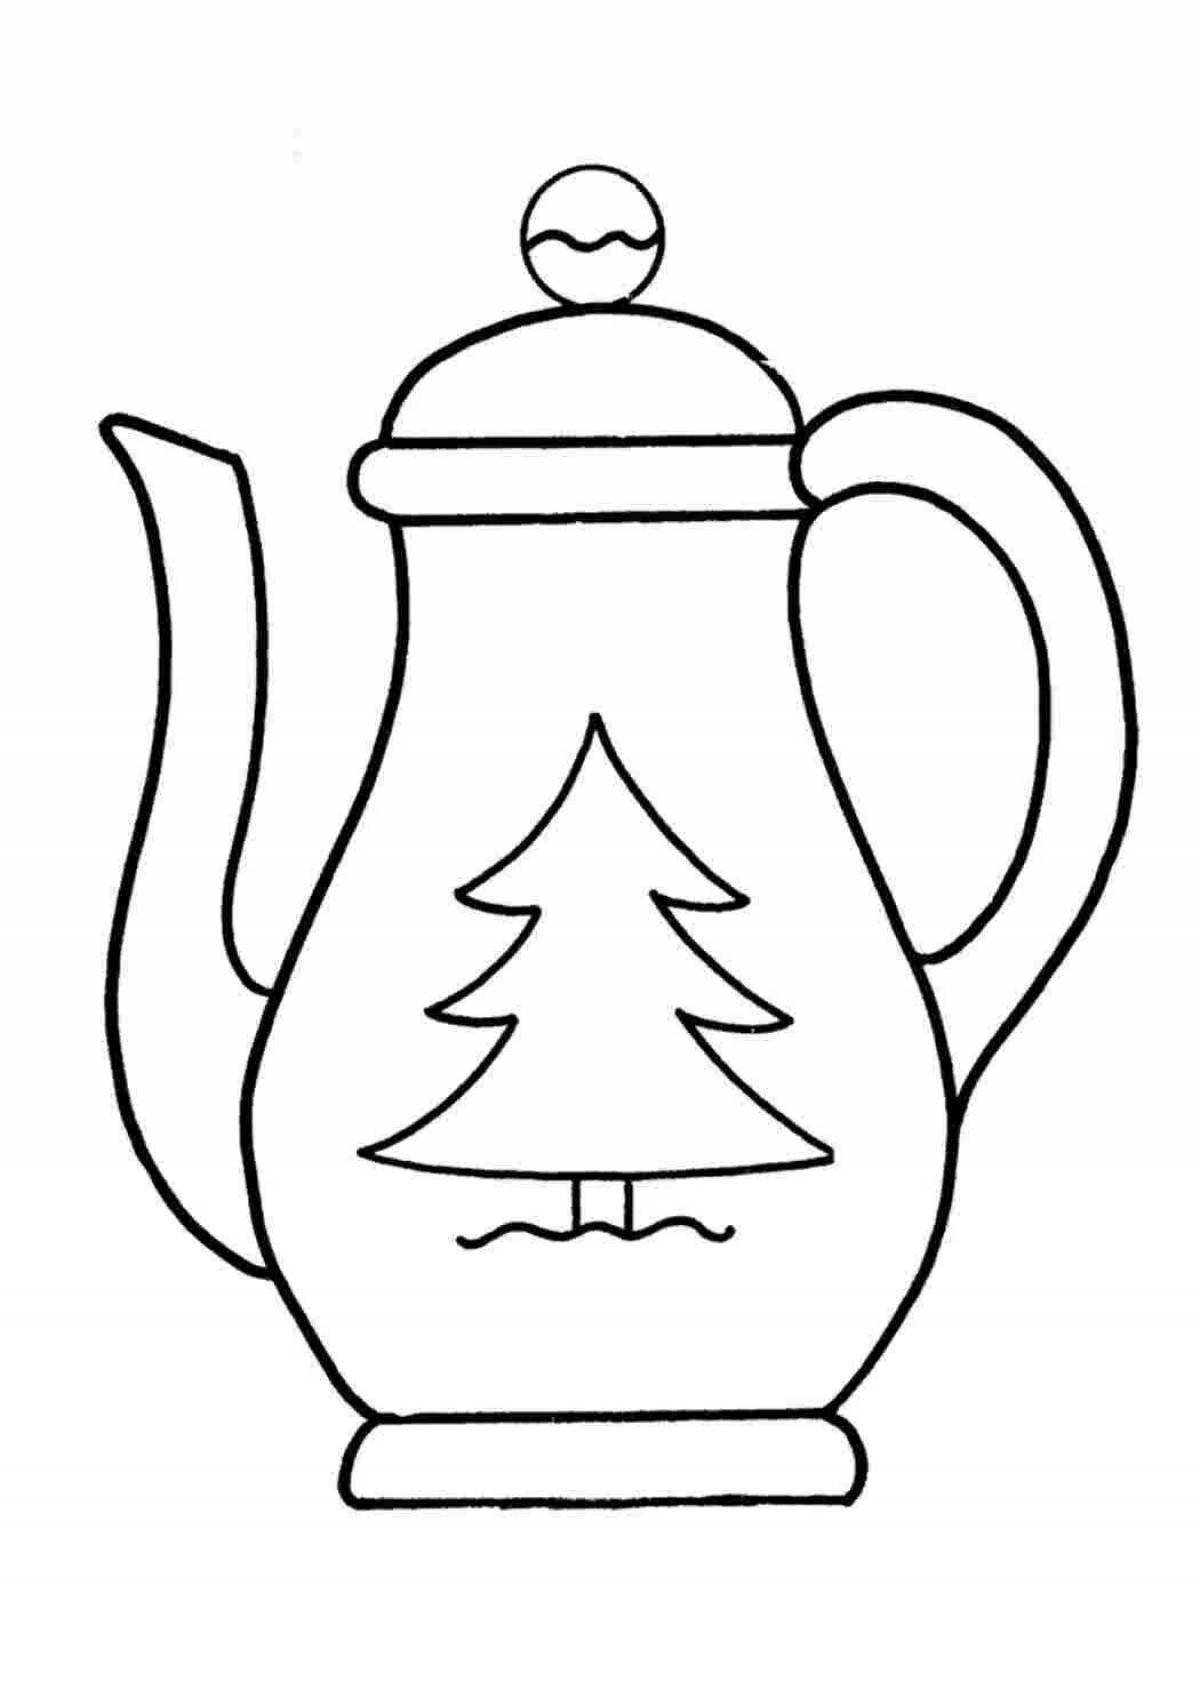 Coloring book peaceful teapot